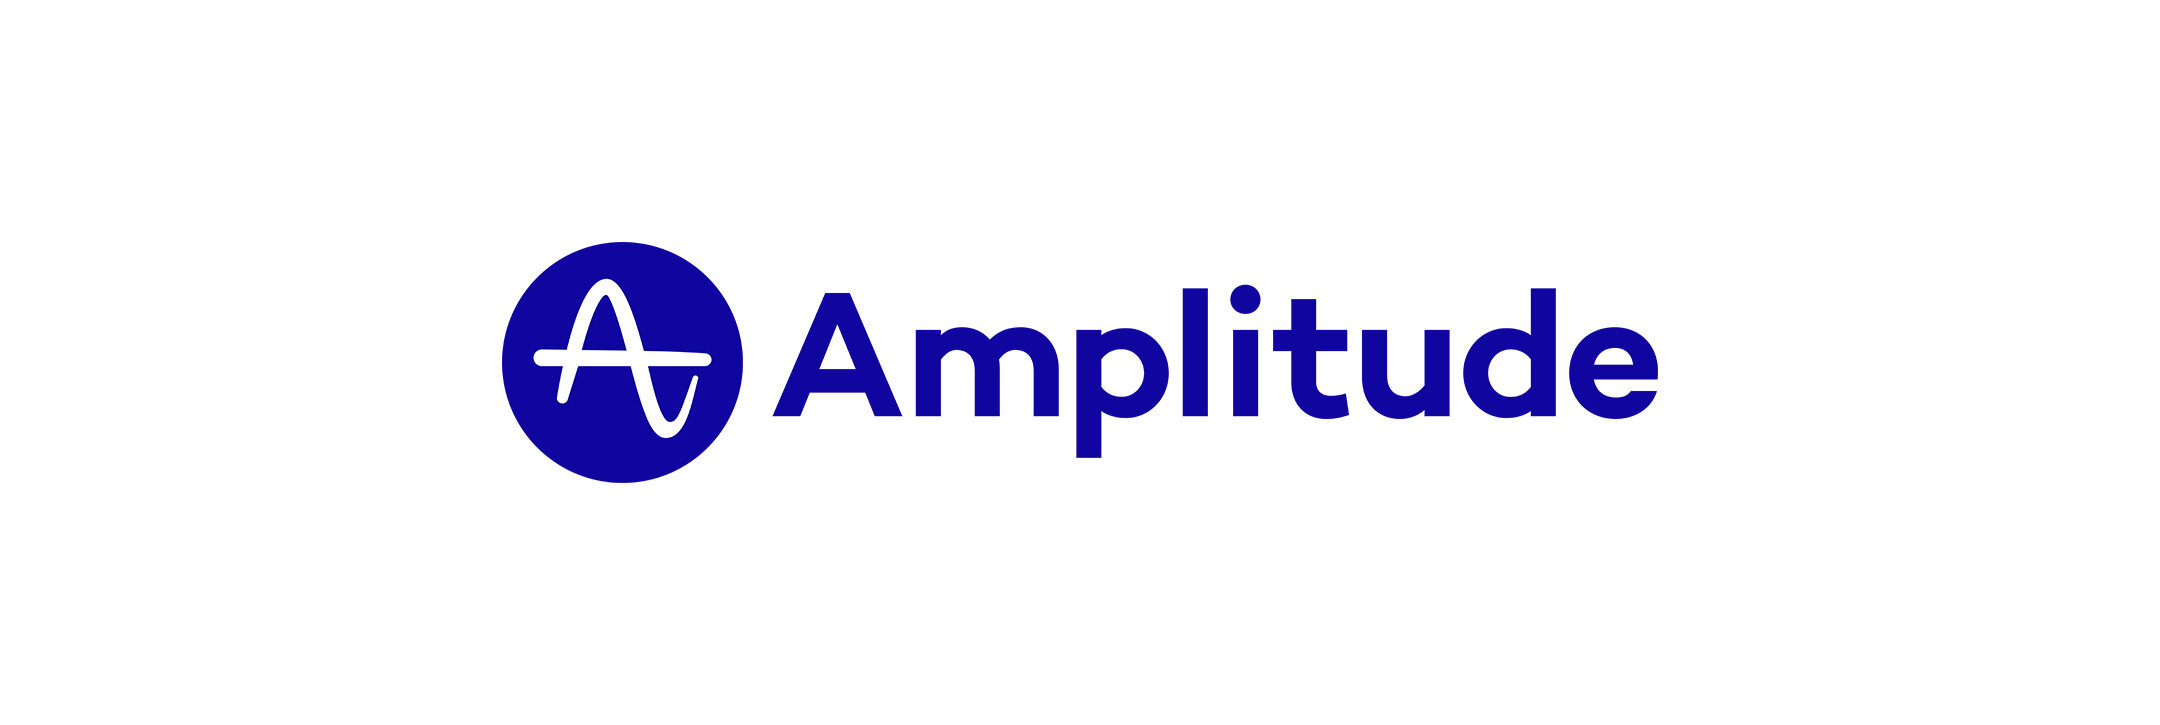 Amplitude_Logo.jpeg